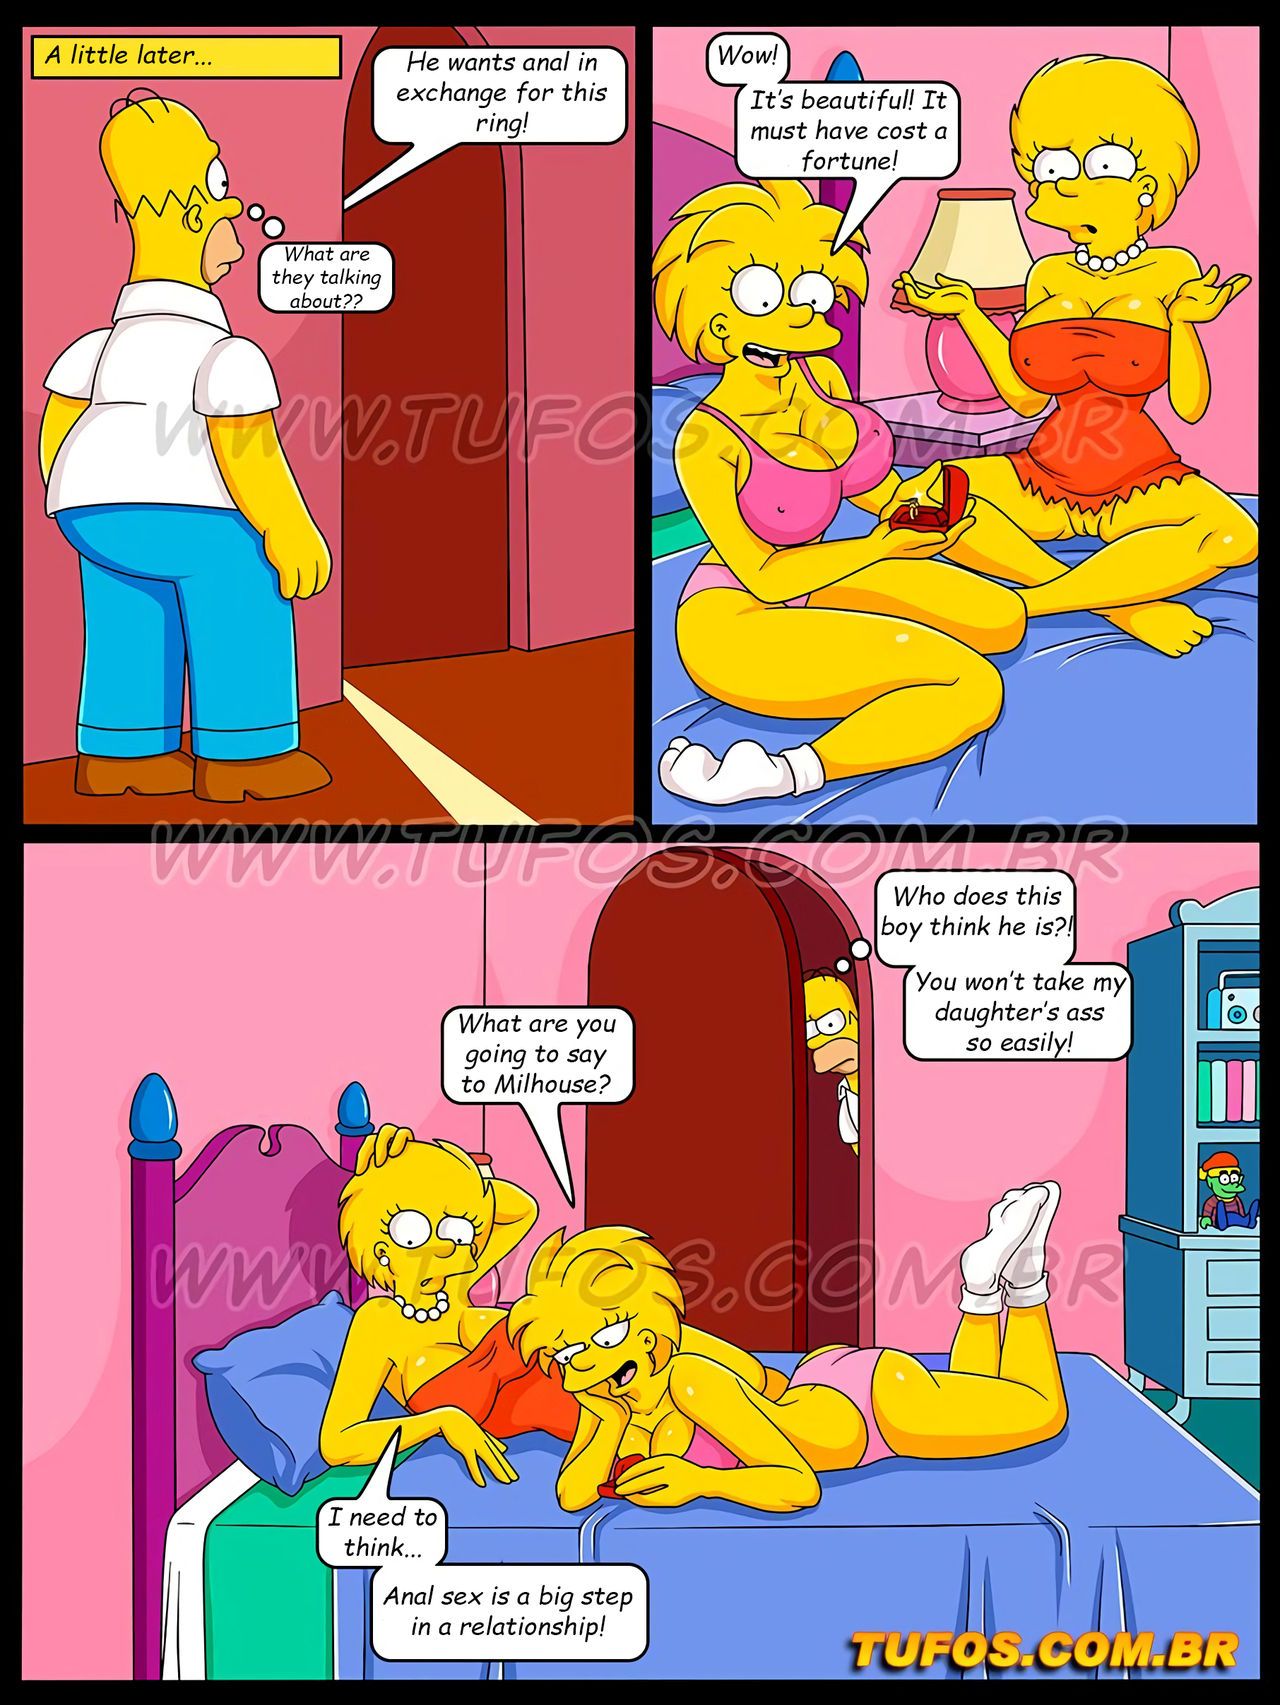 [Tufos] The Simpsons - The Precious Family Ring 4